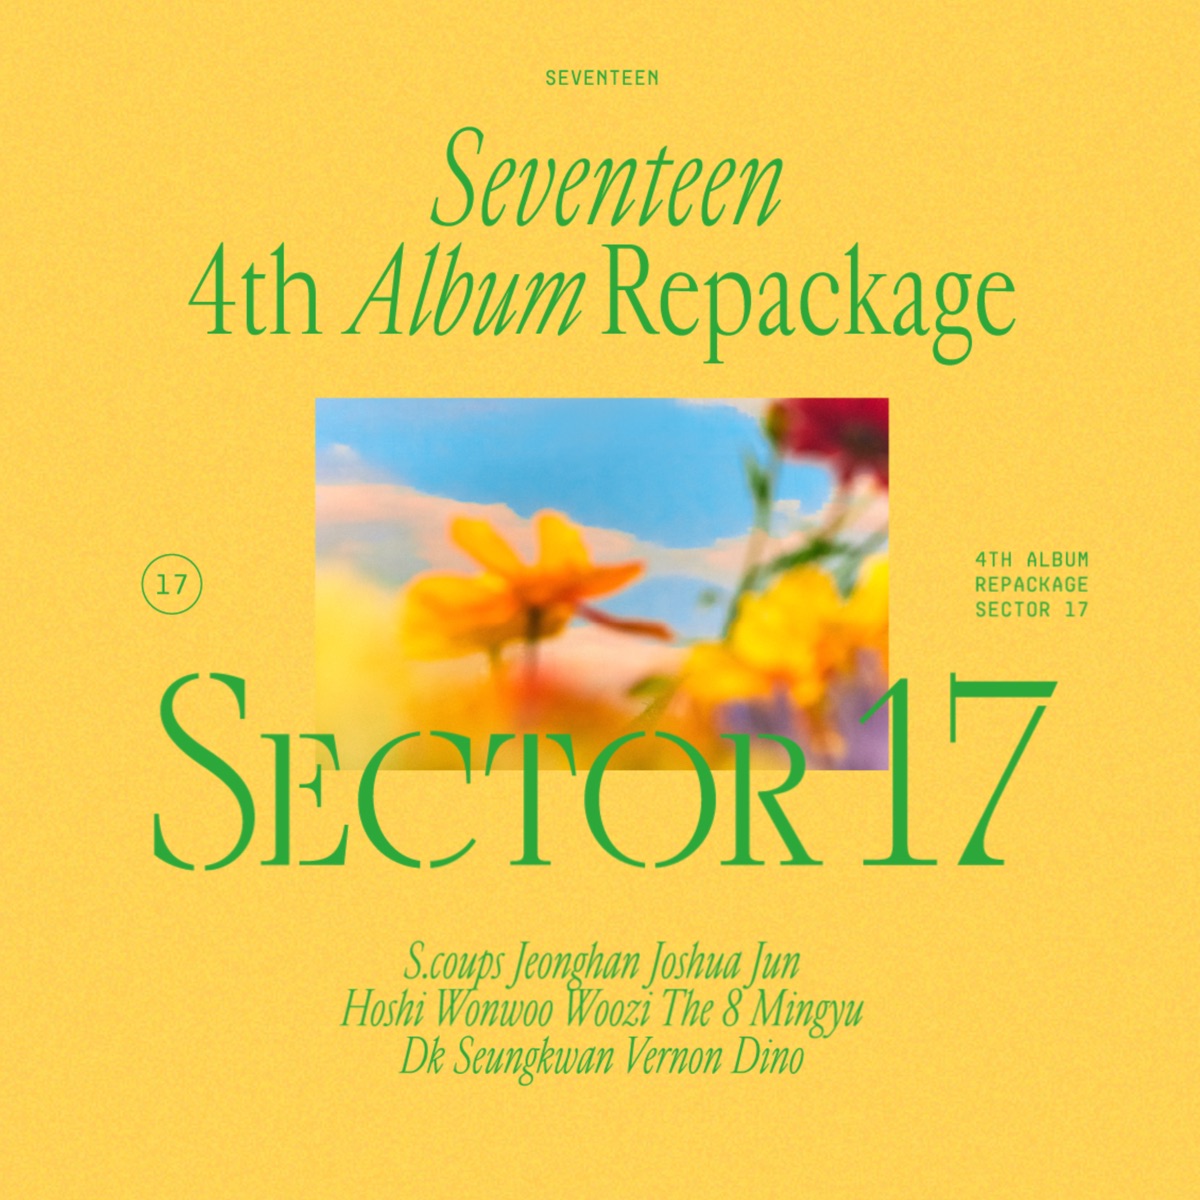 Cover art for『SEVENTEEN - Fallin’ Flower (Korean Ver.)』from the release『SEVENTEEN 4th Album Repackage ‘SECTOR 17’』